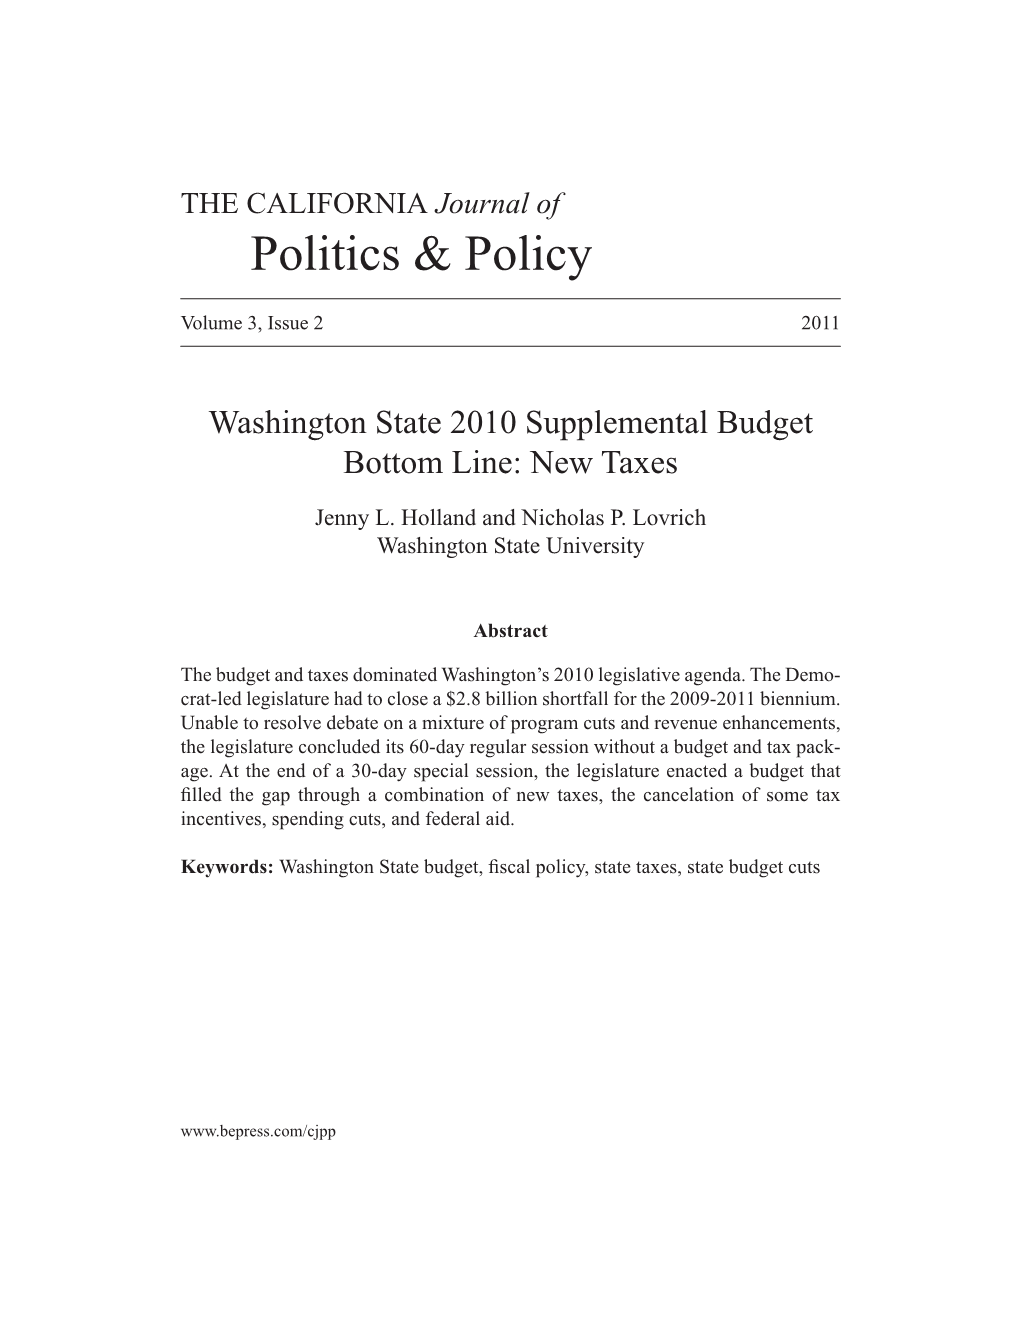 Washington State 2010 Supplemental Budget Bottom Line: New Taxes